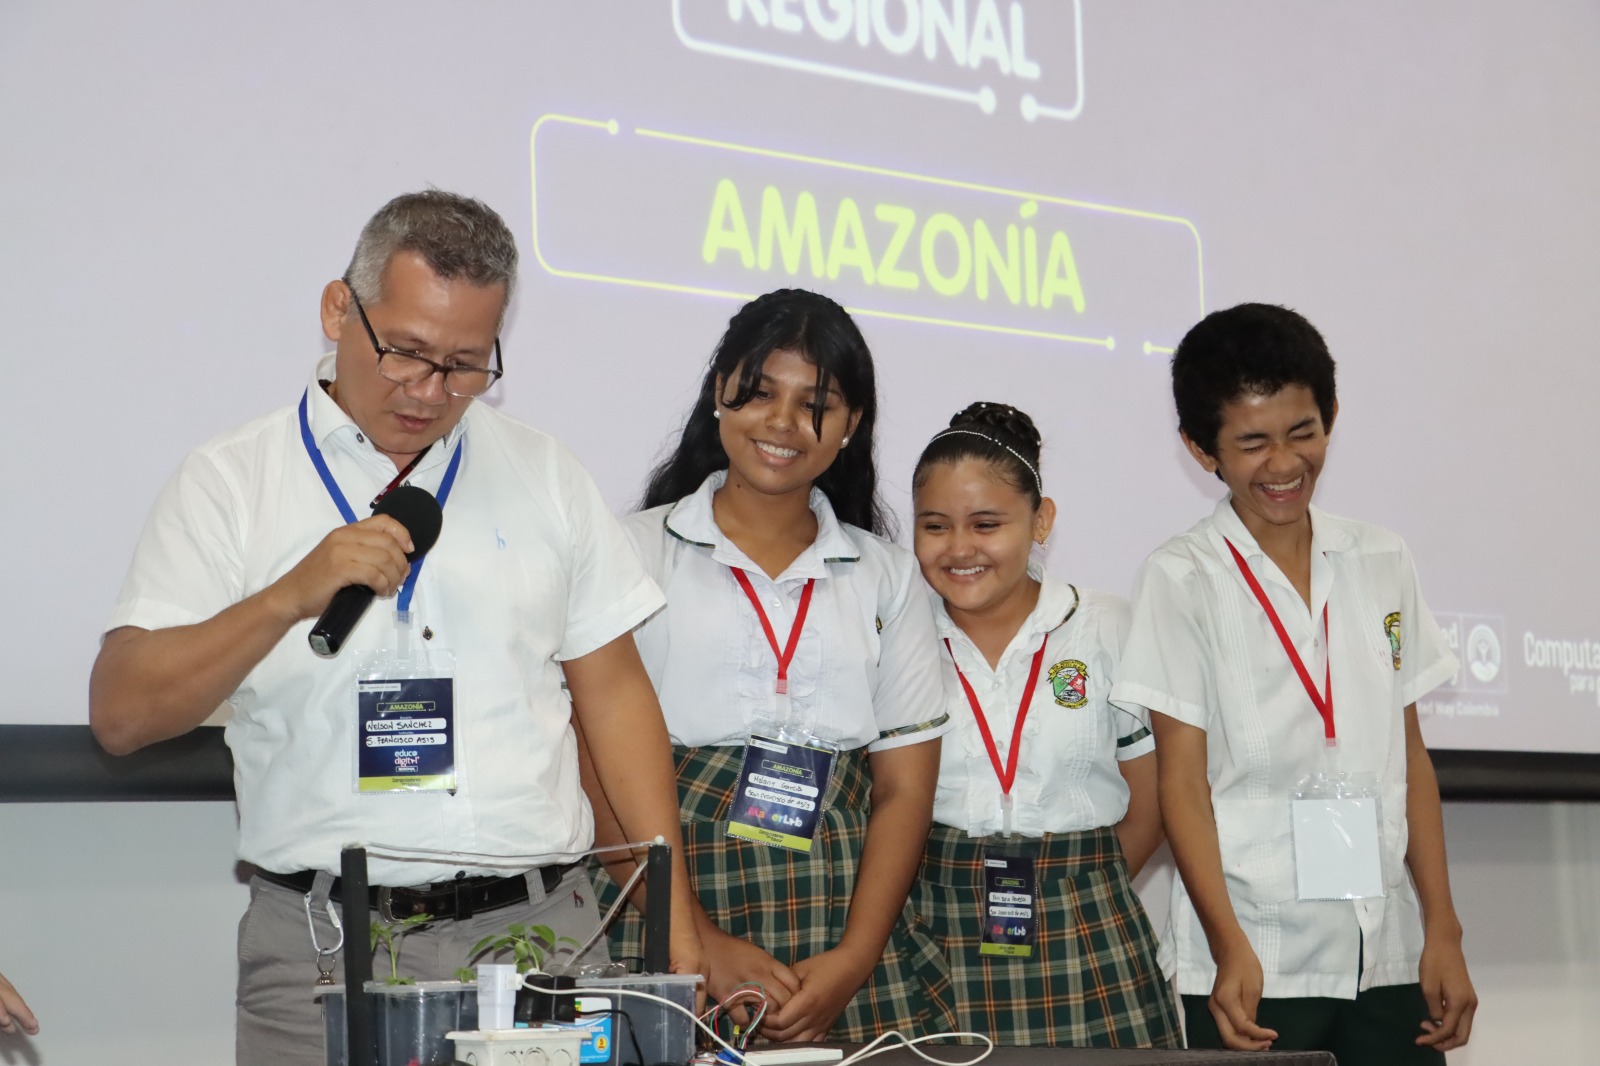 Educa Regional Amazonía